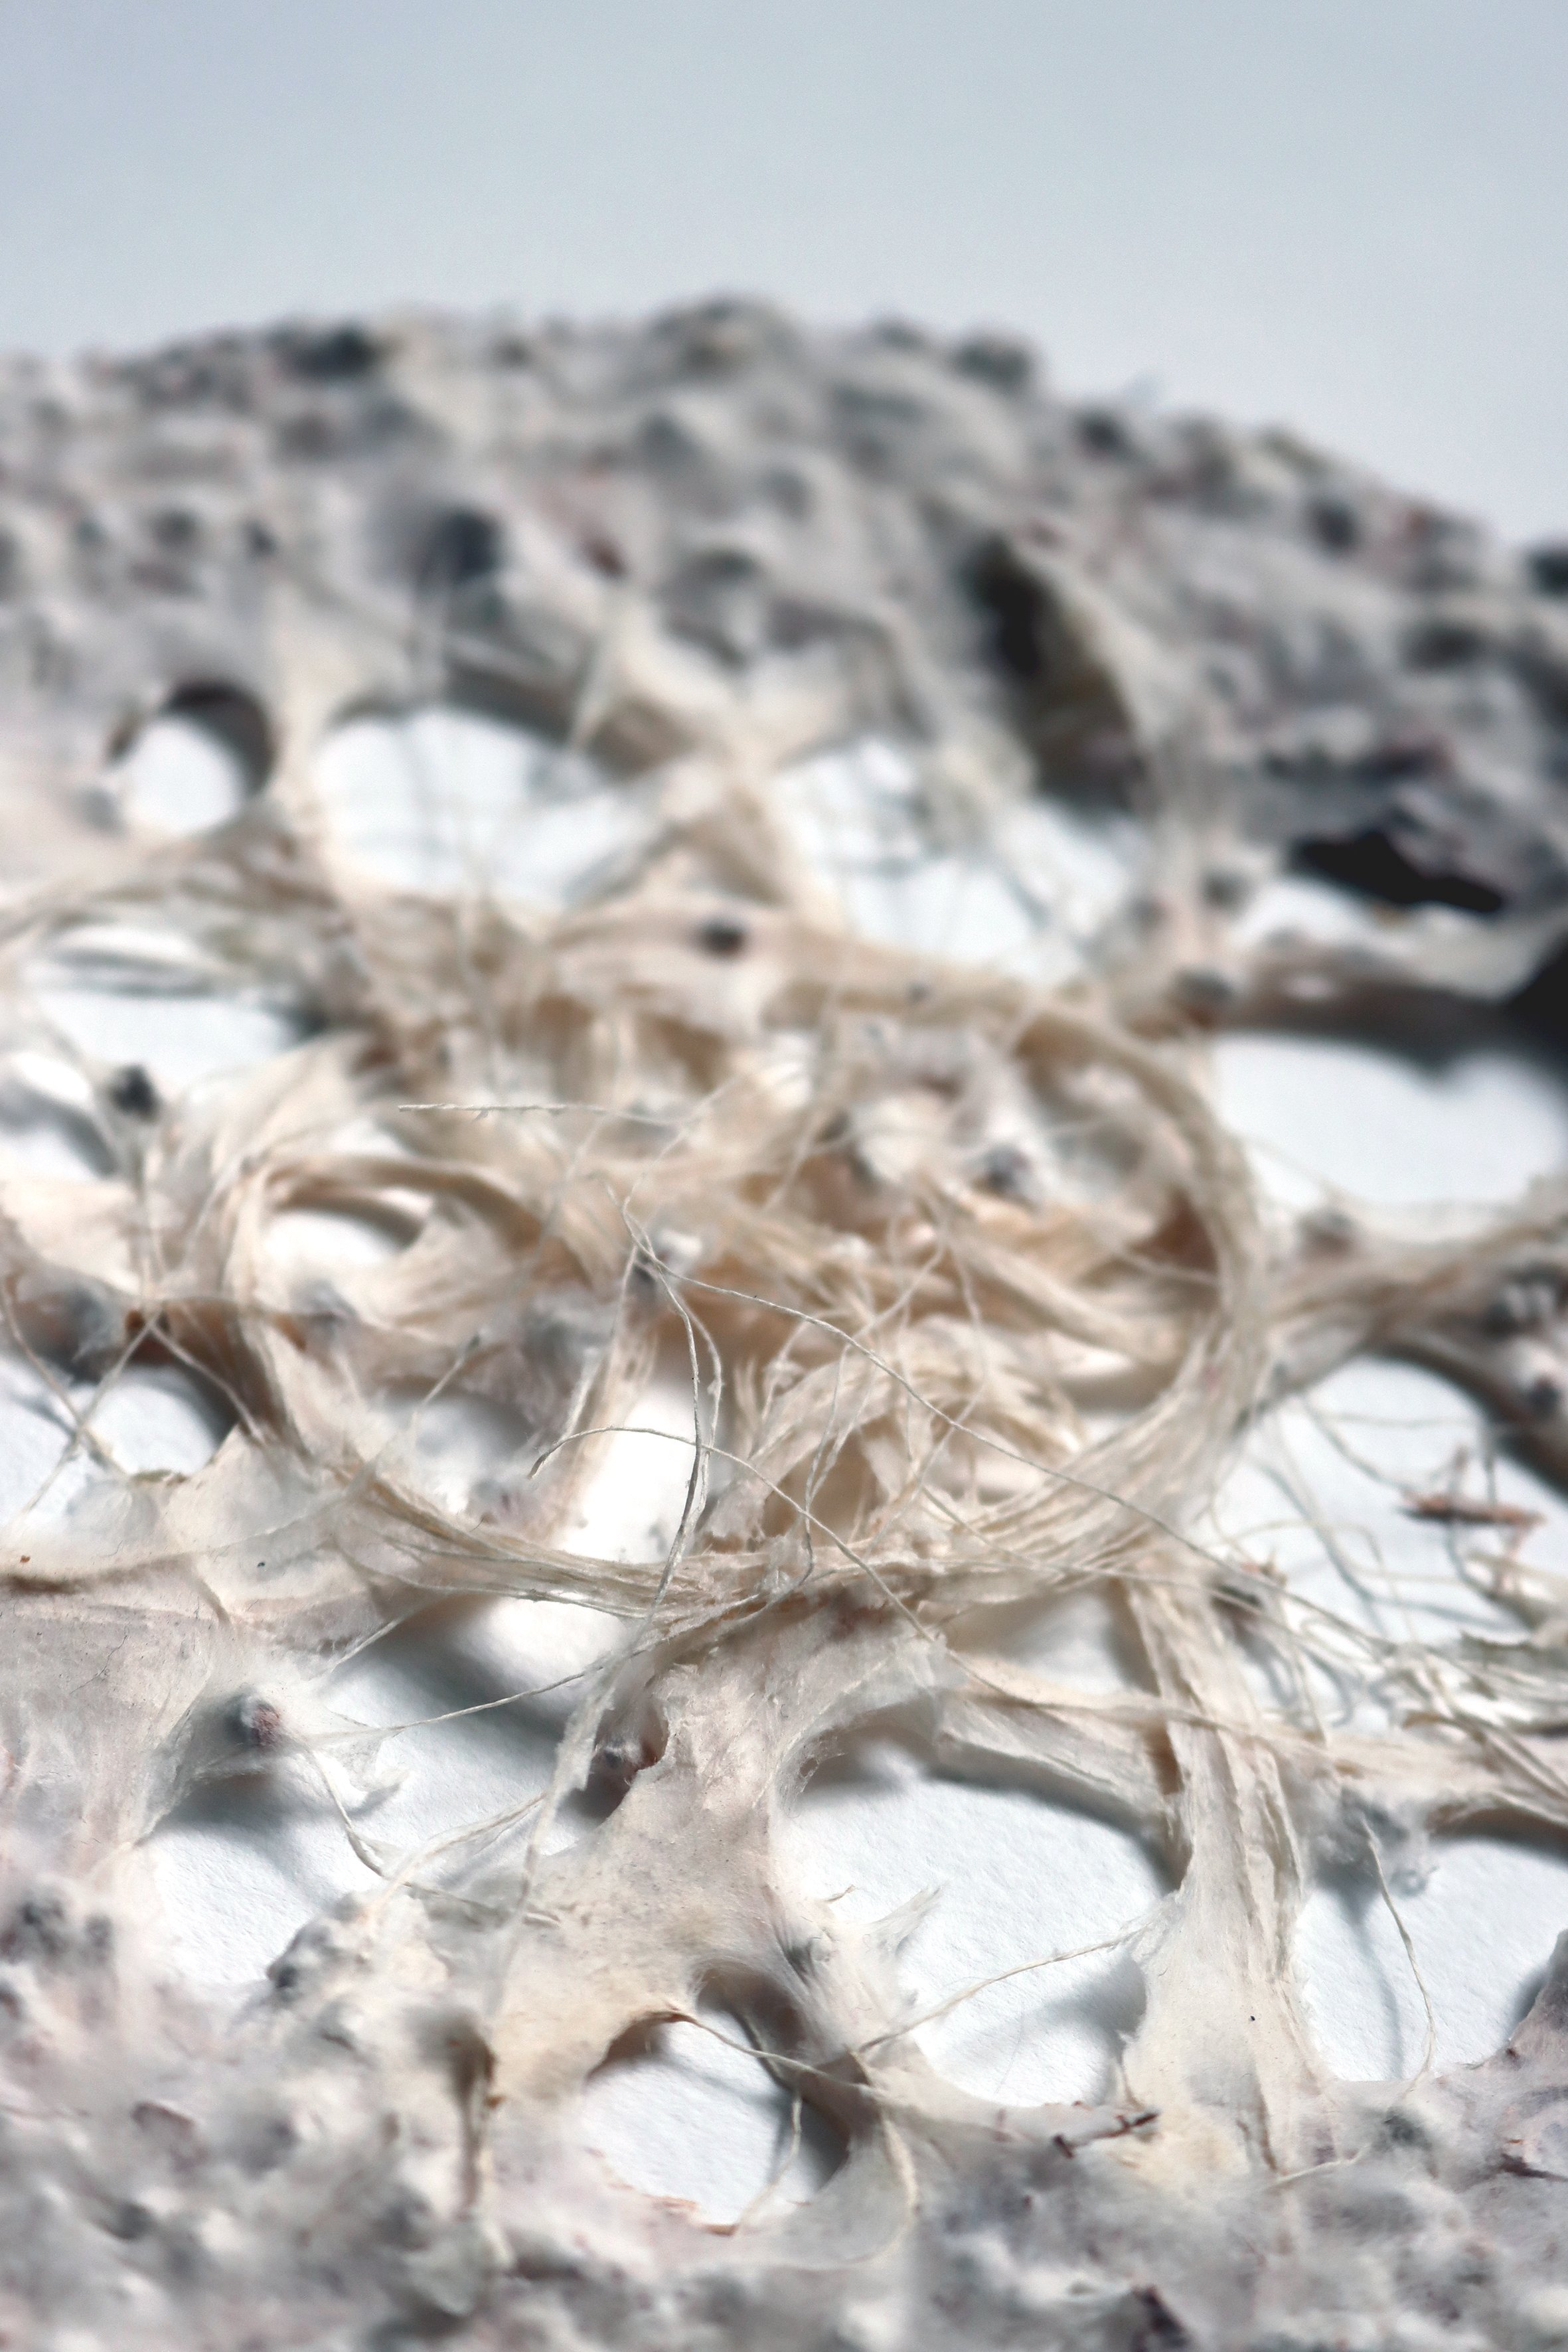 mycelium textiles-doily detail-carole collet 2019.jpg